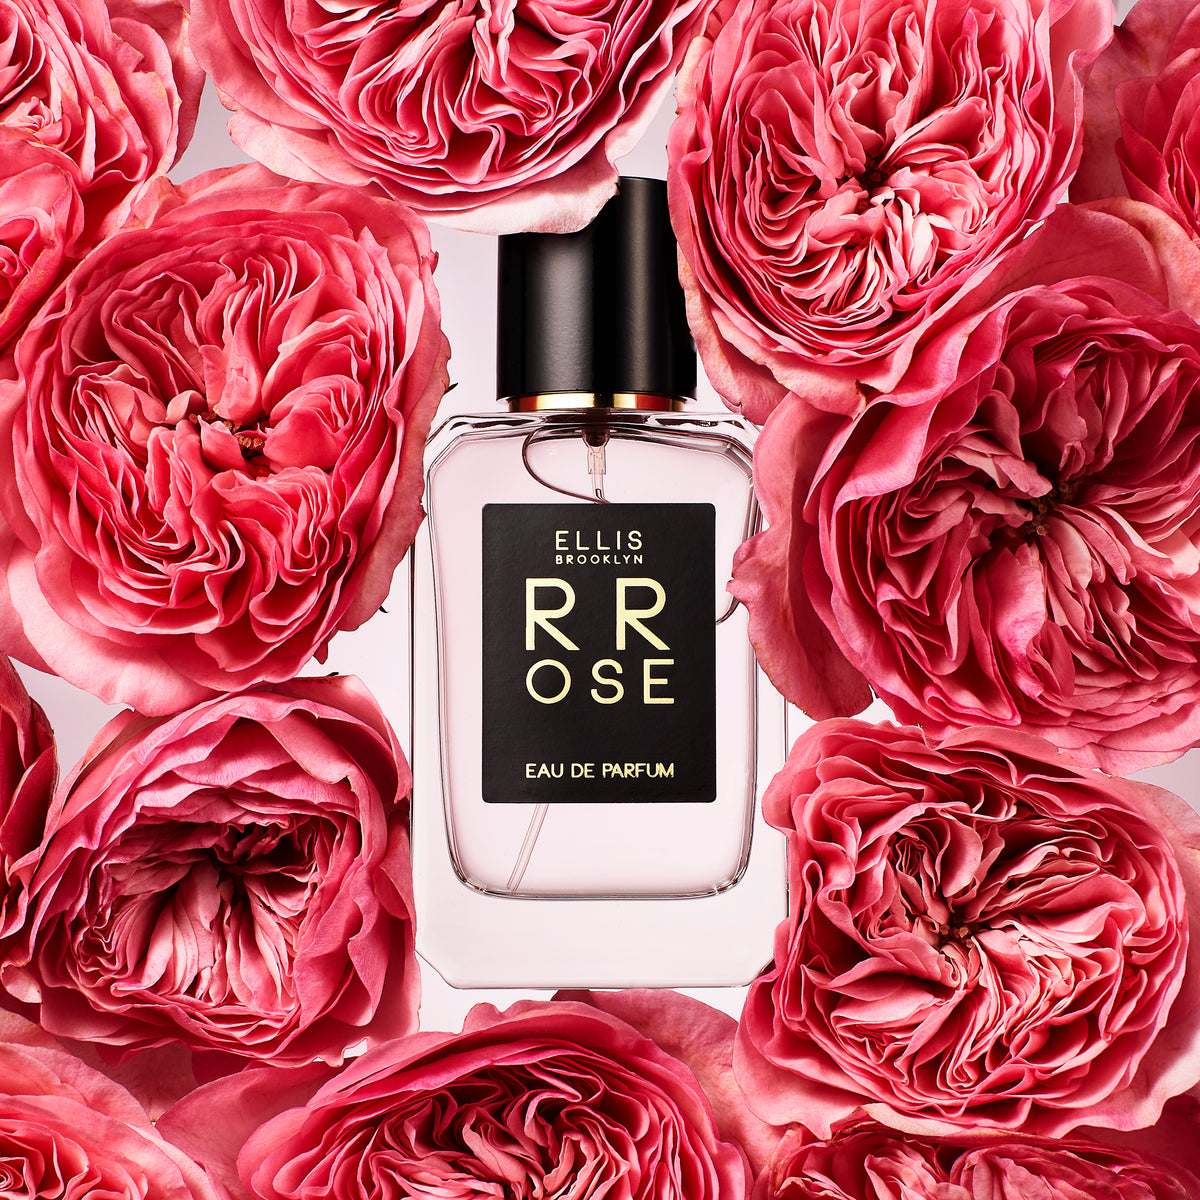 RROSE in roses